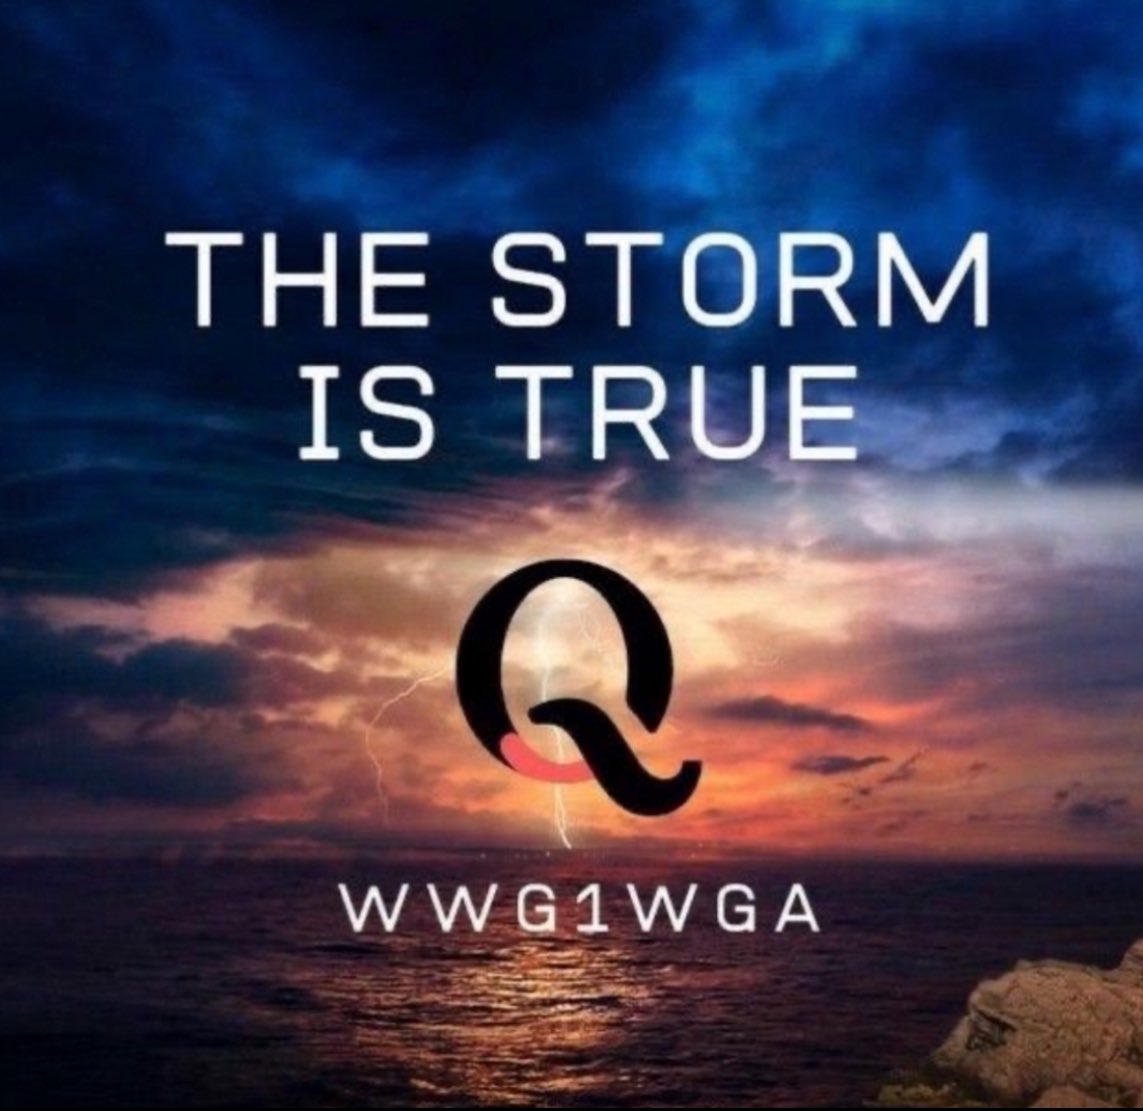 The Storm Is True 
Q 
#WWG1WGA 
#WeAreTheNews
#WeAreTheStorm
#SaveTheChildrenWorldWide